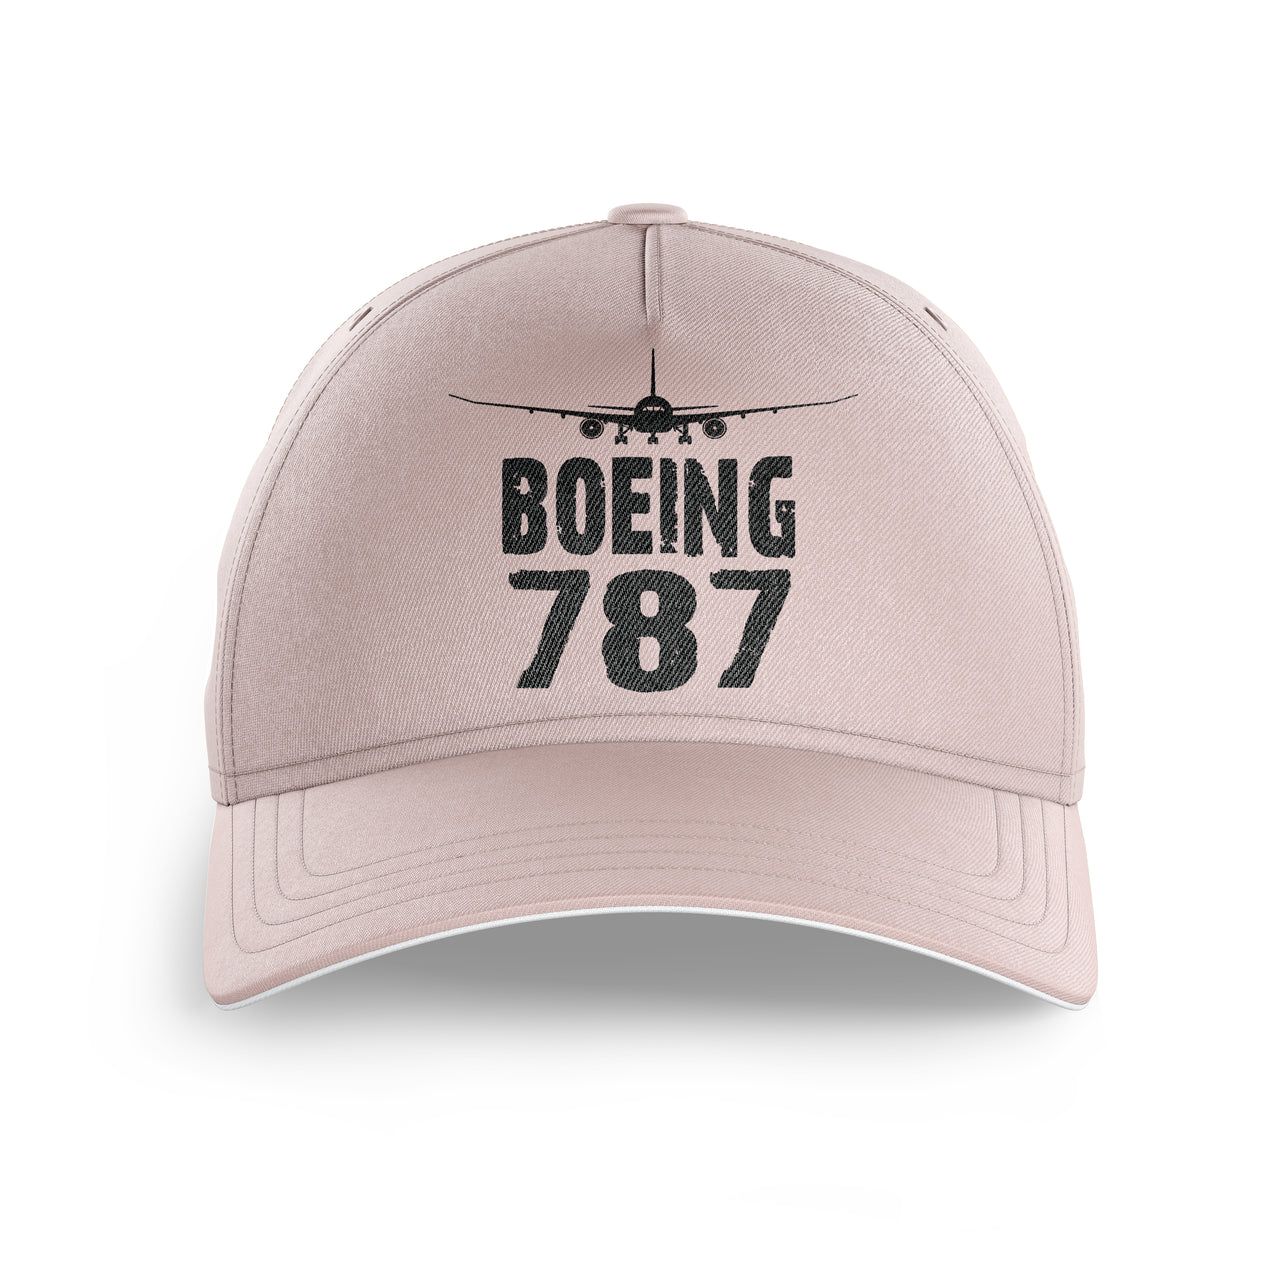 Boeing 787 & Plane Printed Hats